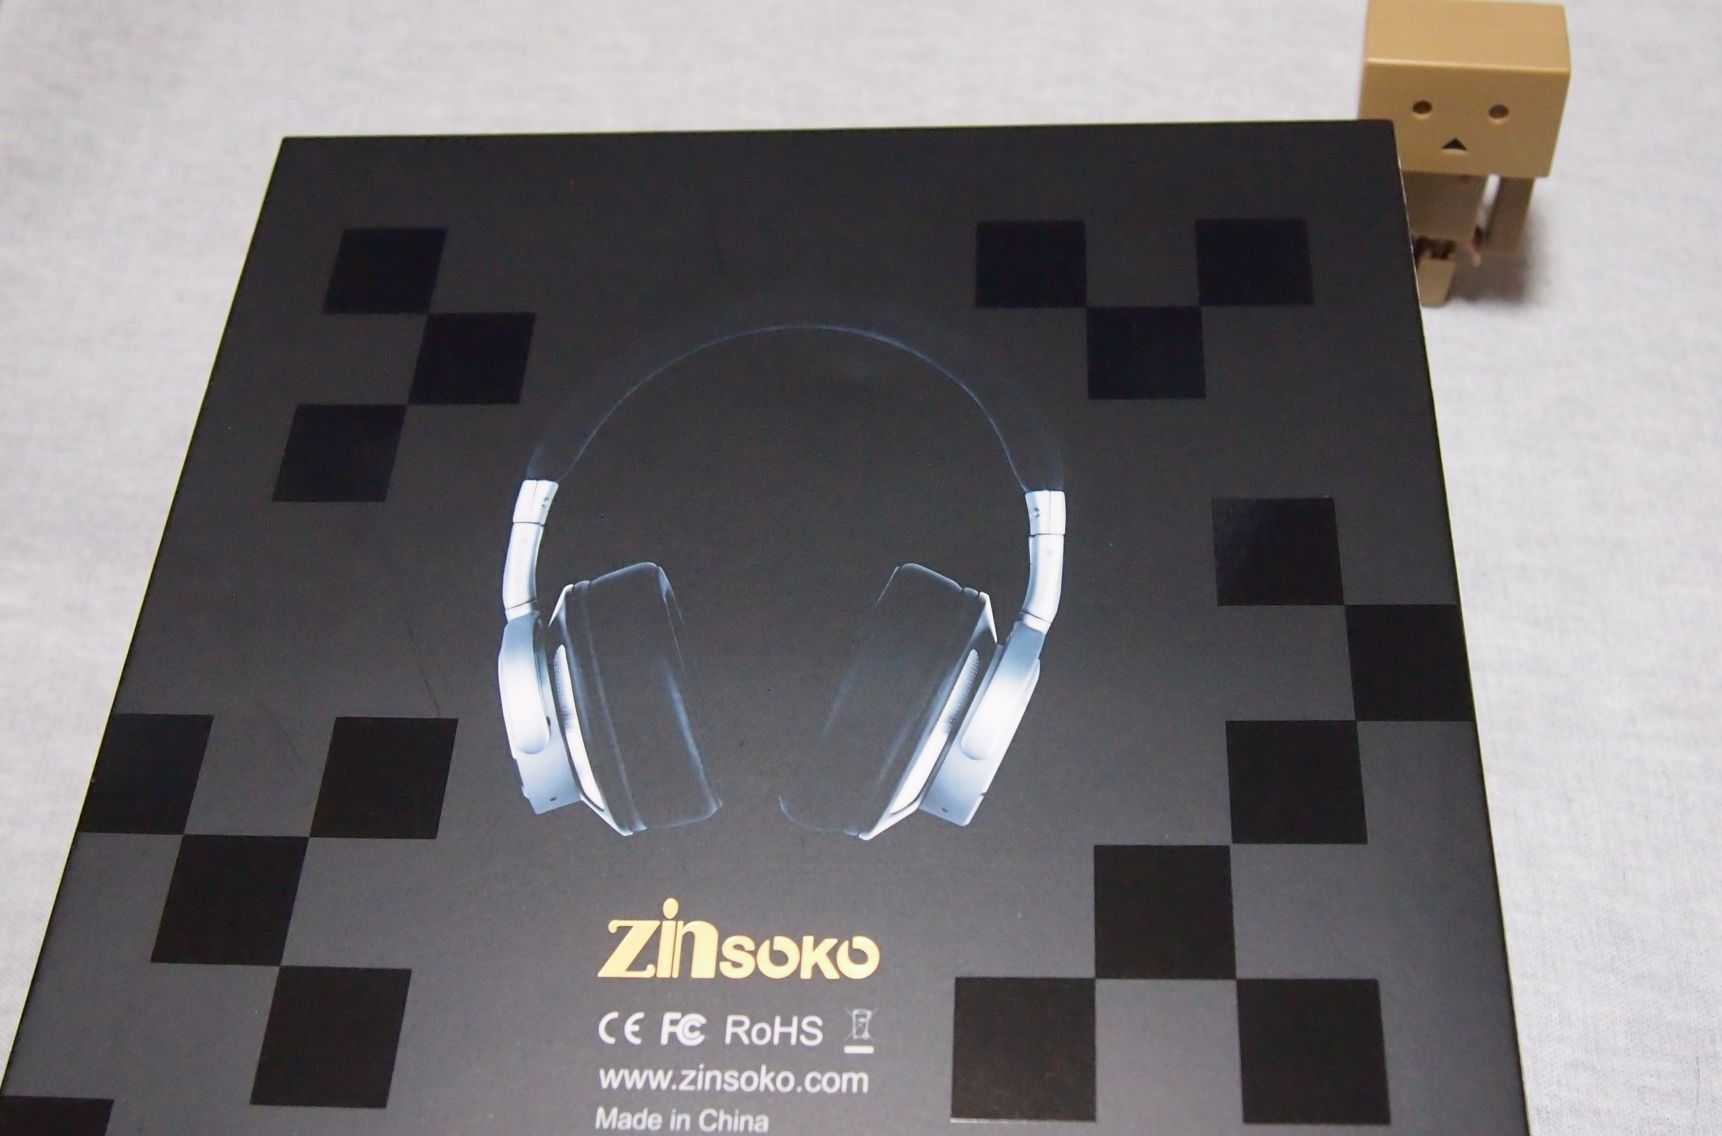  Zinsoko Z-H01 bluetoothヘッドホン